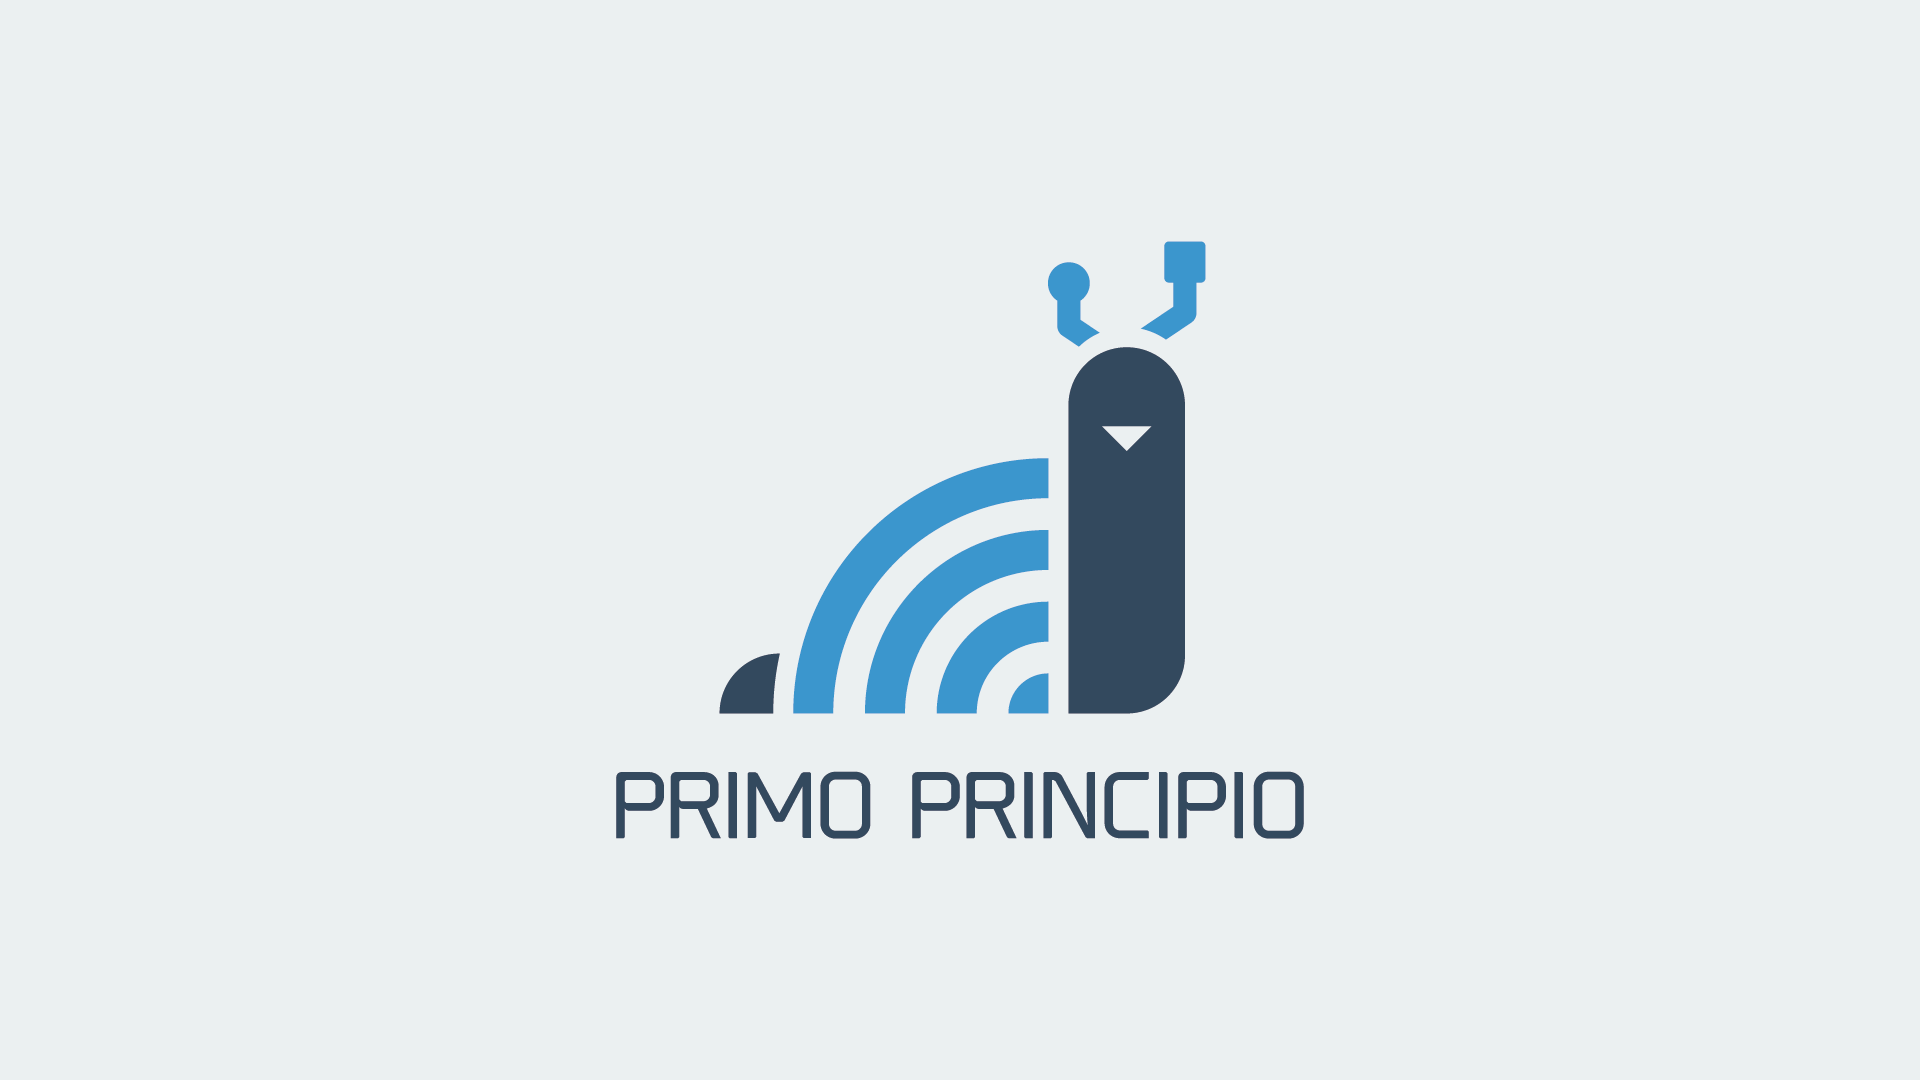 Primo Principio logo